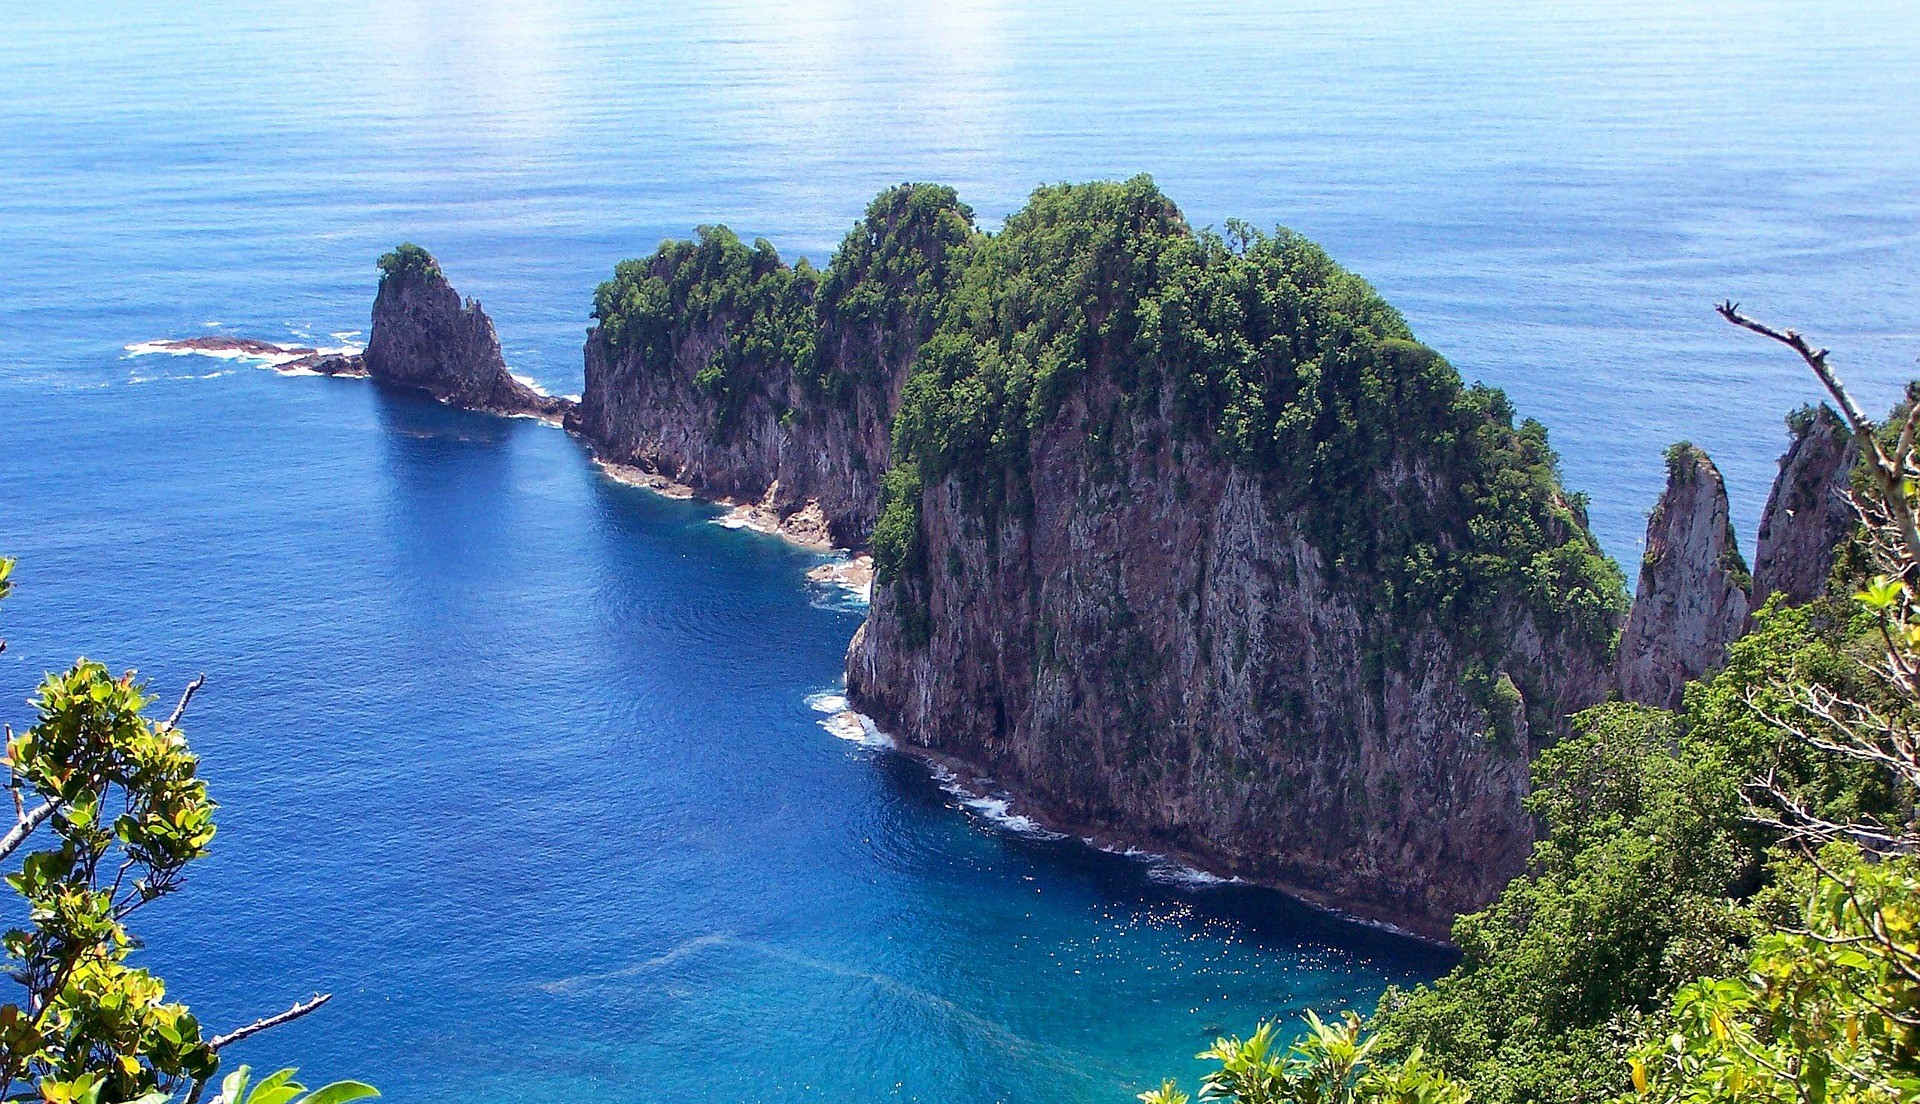 Discover Samoa, Explore Our Islands